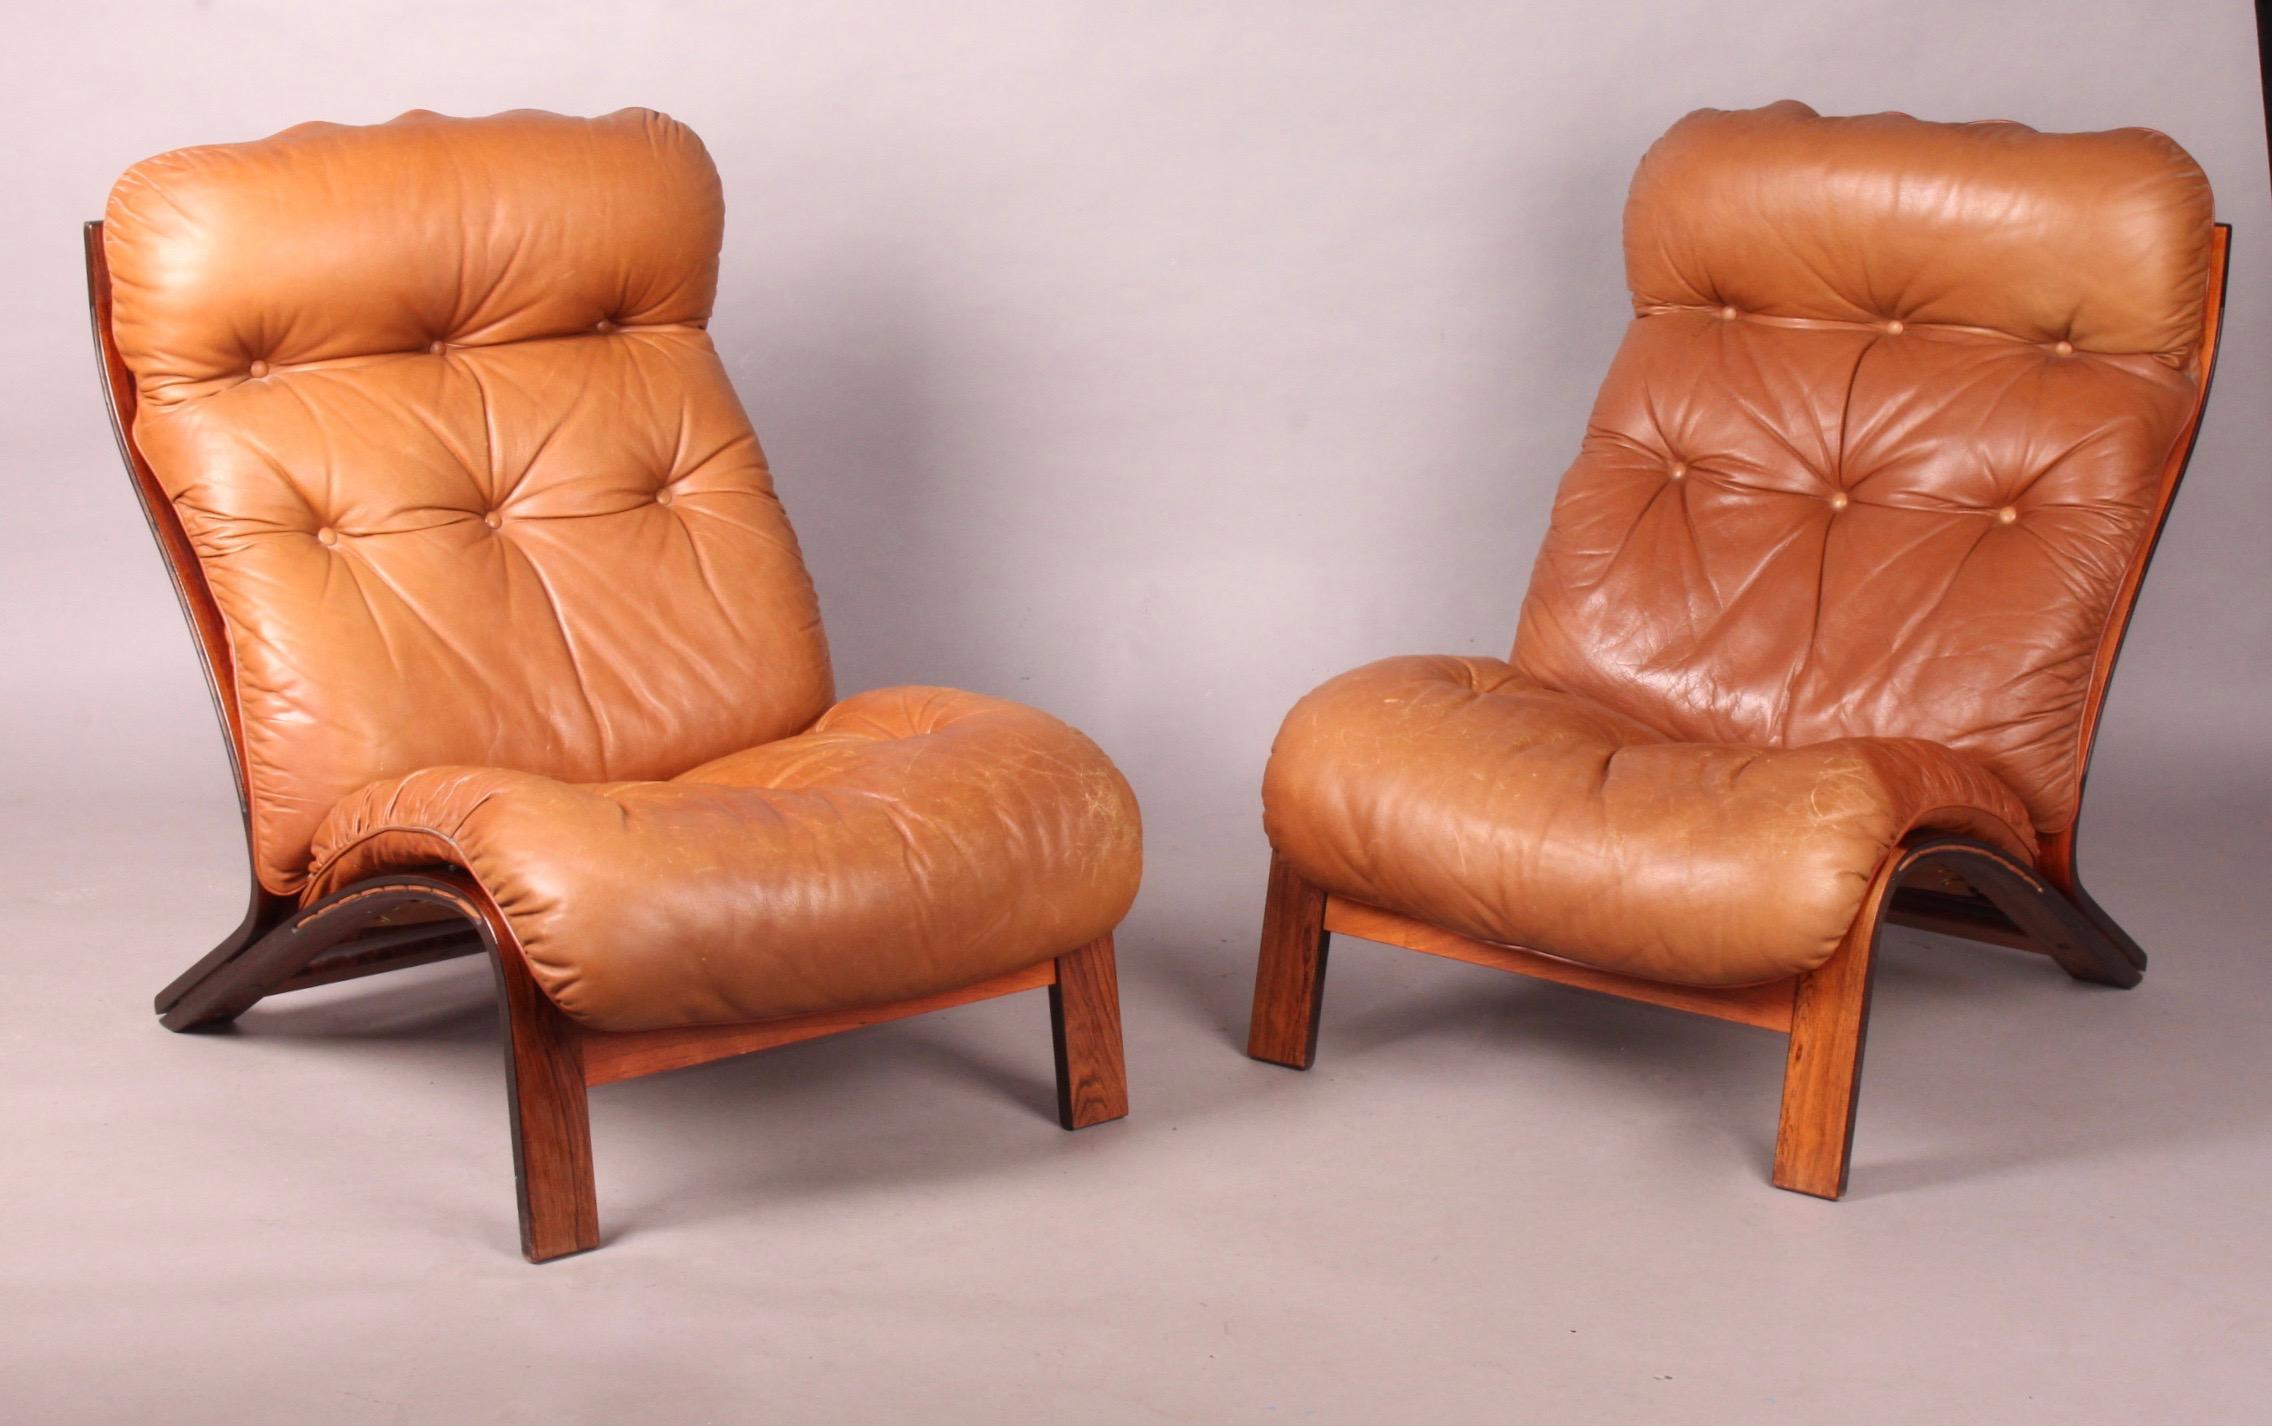 RyBo Rykken Vintage Scandinavian Pair of Leather Lounge Chairs 1